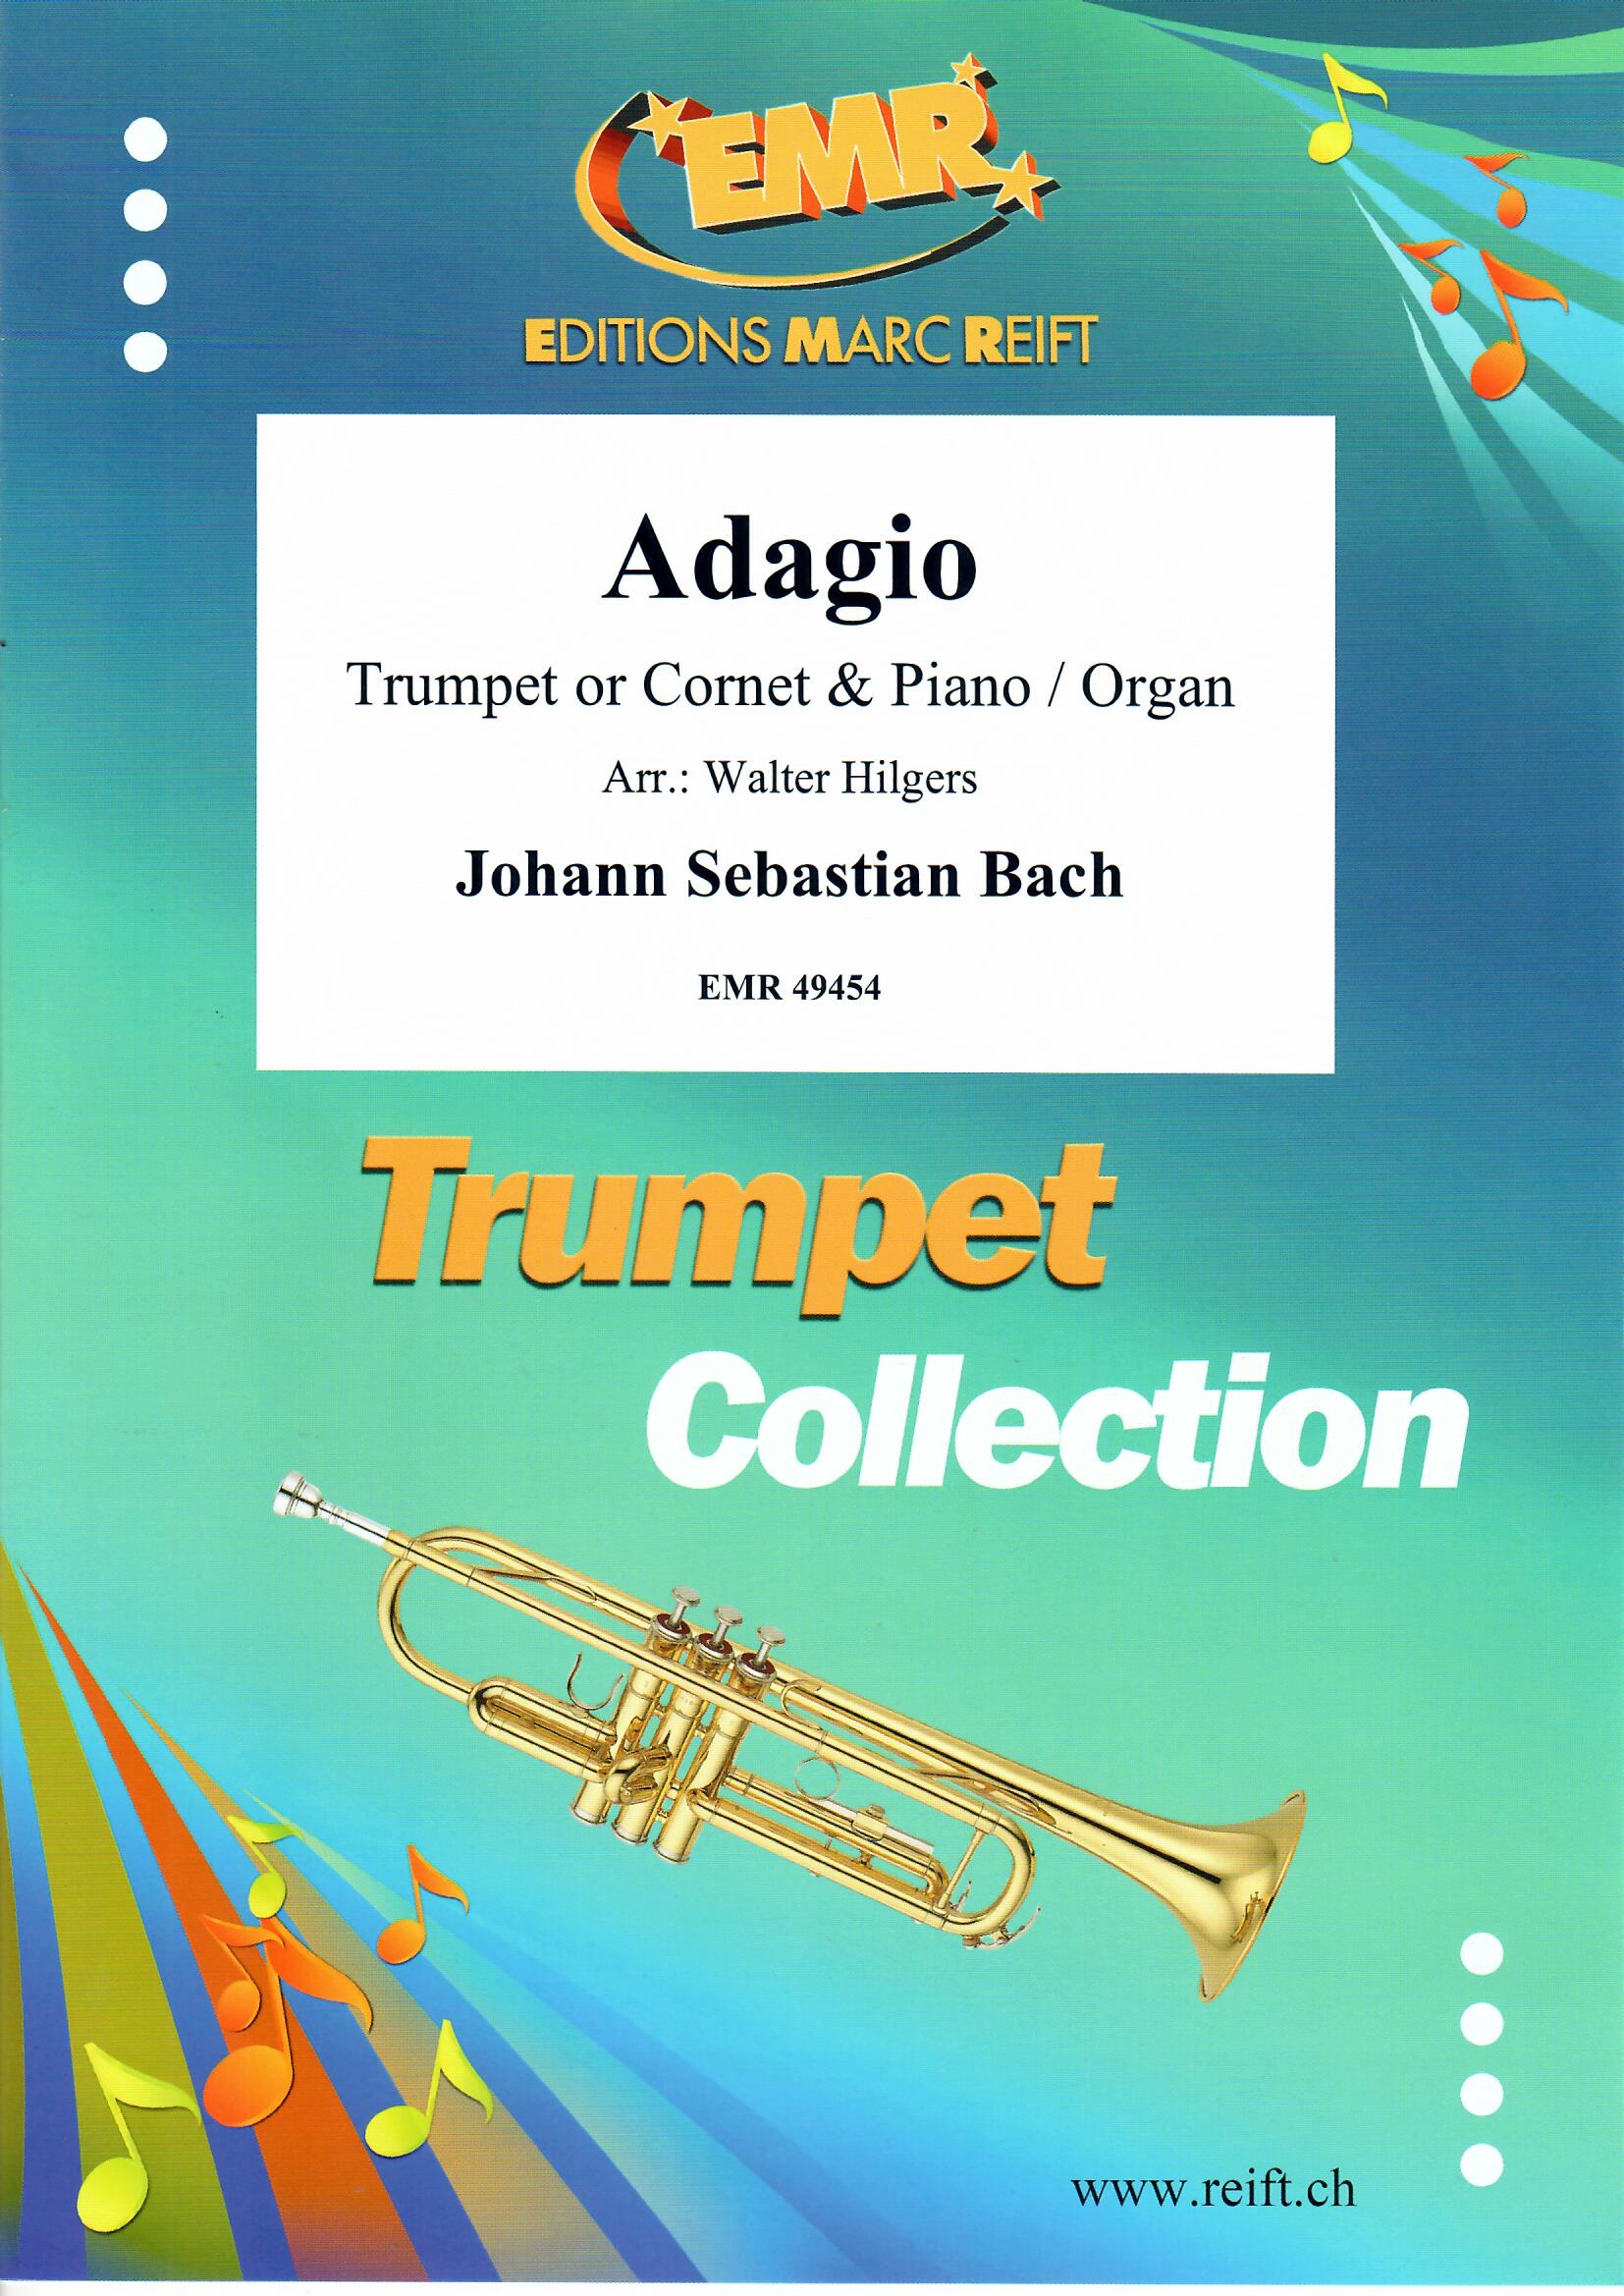 ADAGIO - Trumpet & Piano, SOLOS - B♭. Cornet/Trumpet with Piano